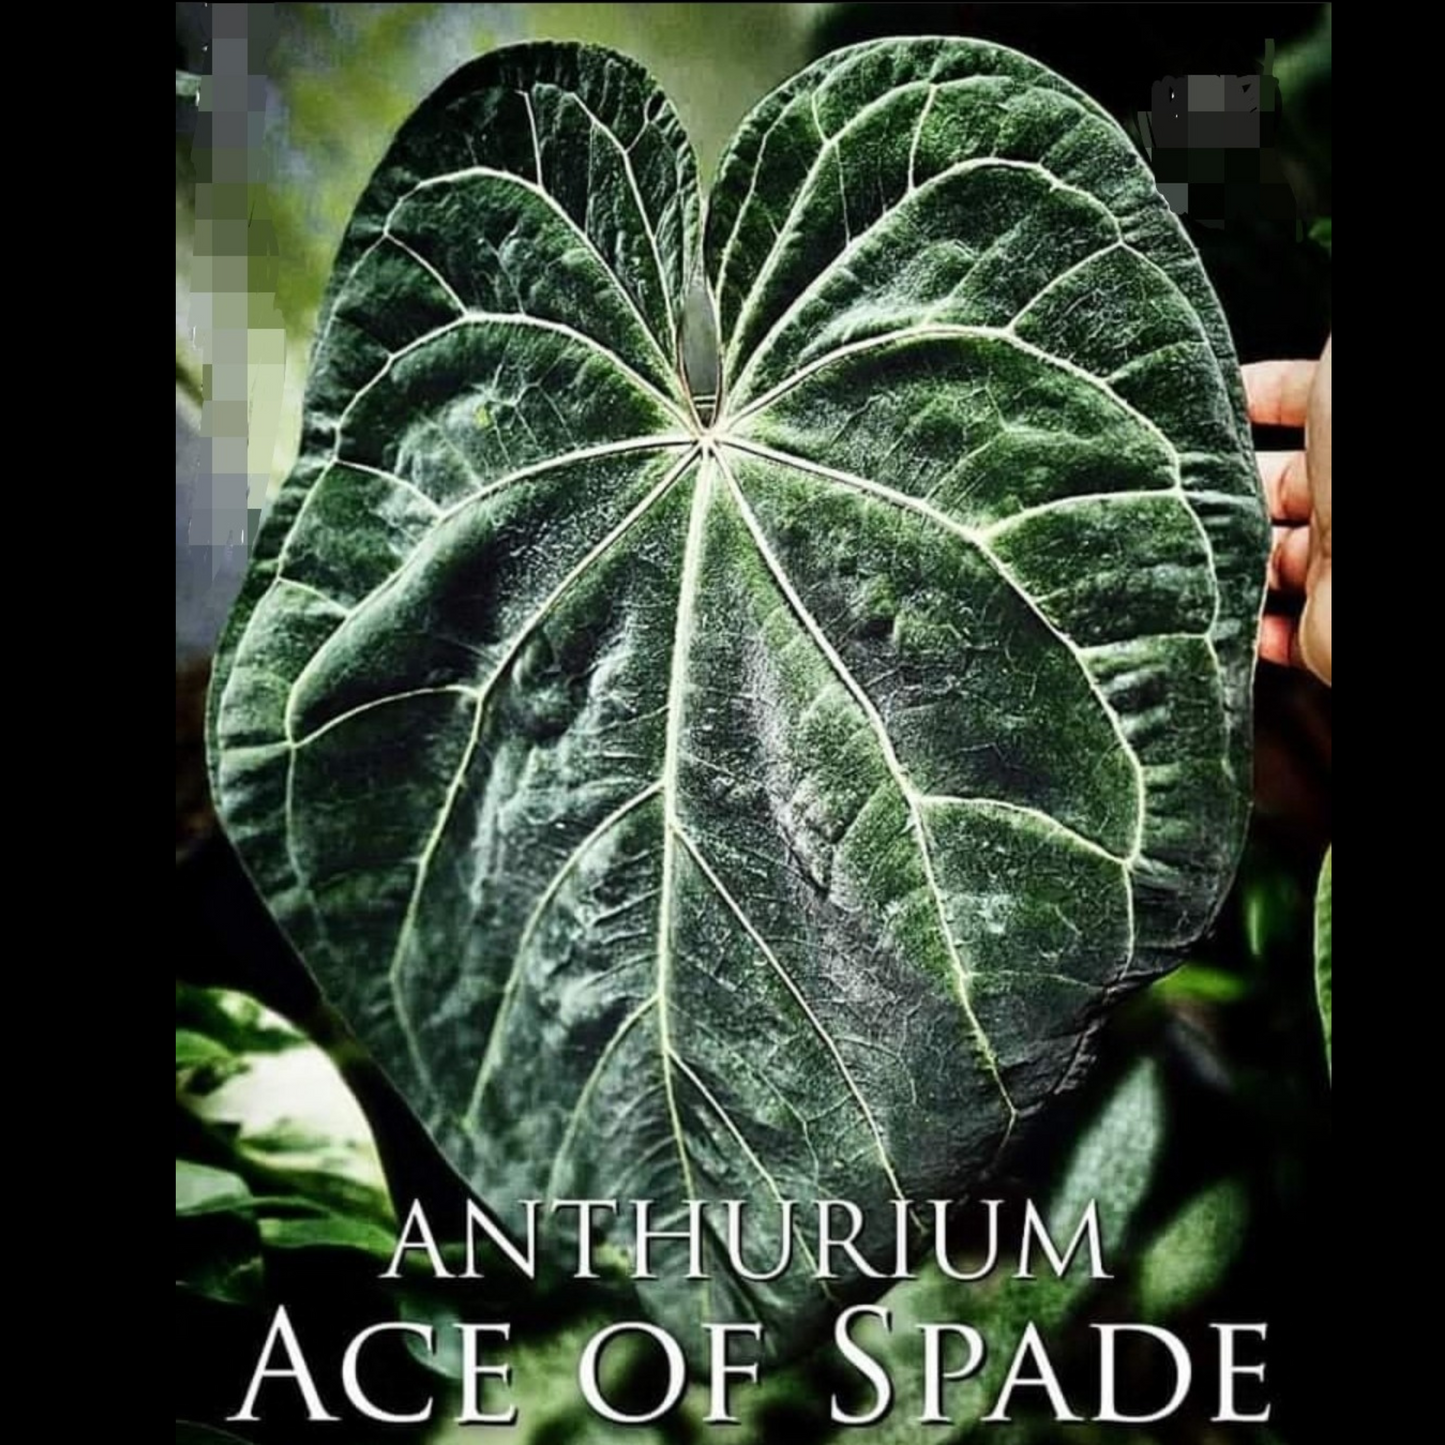 rare Anthurium Ace of Spades for sale in Perth Australia